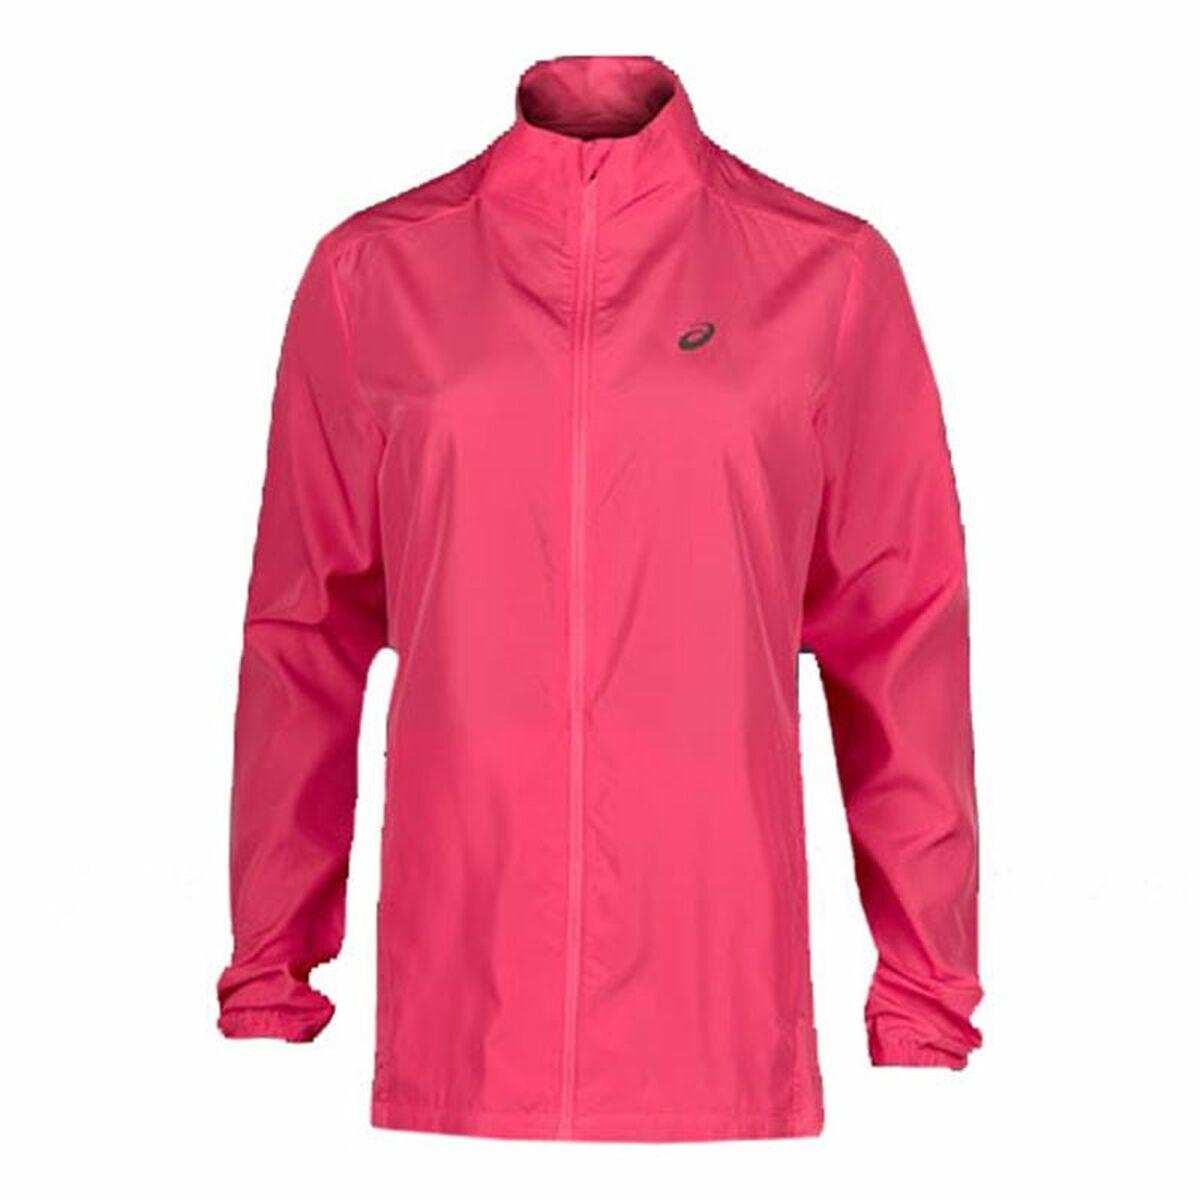 Asics Women's Sports Jacket Light Pink | Lyst